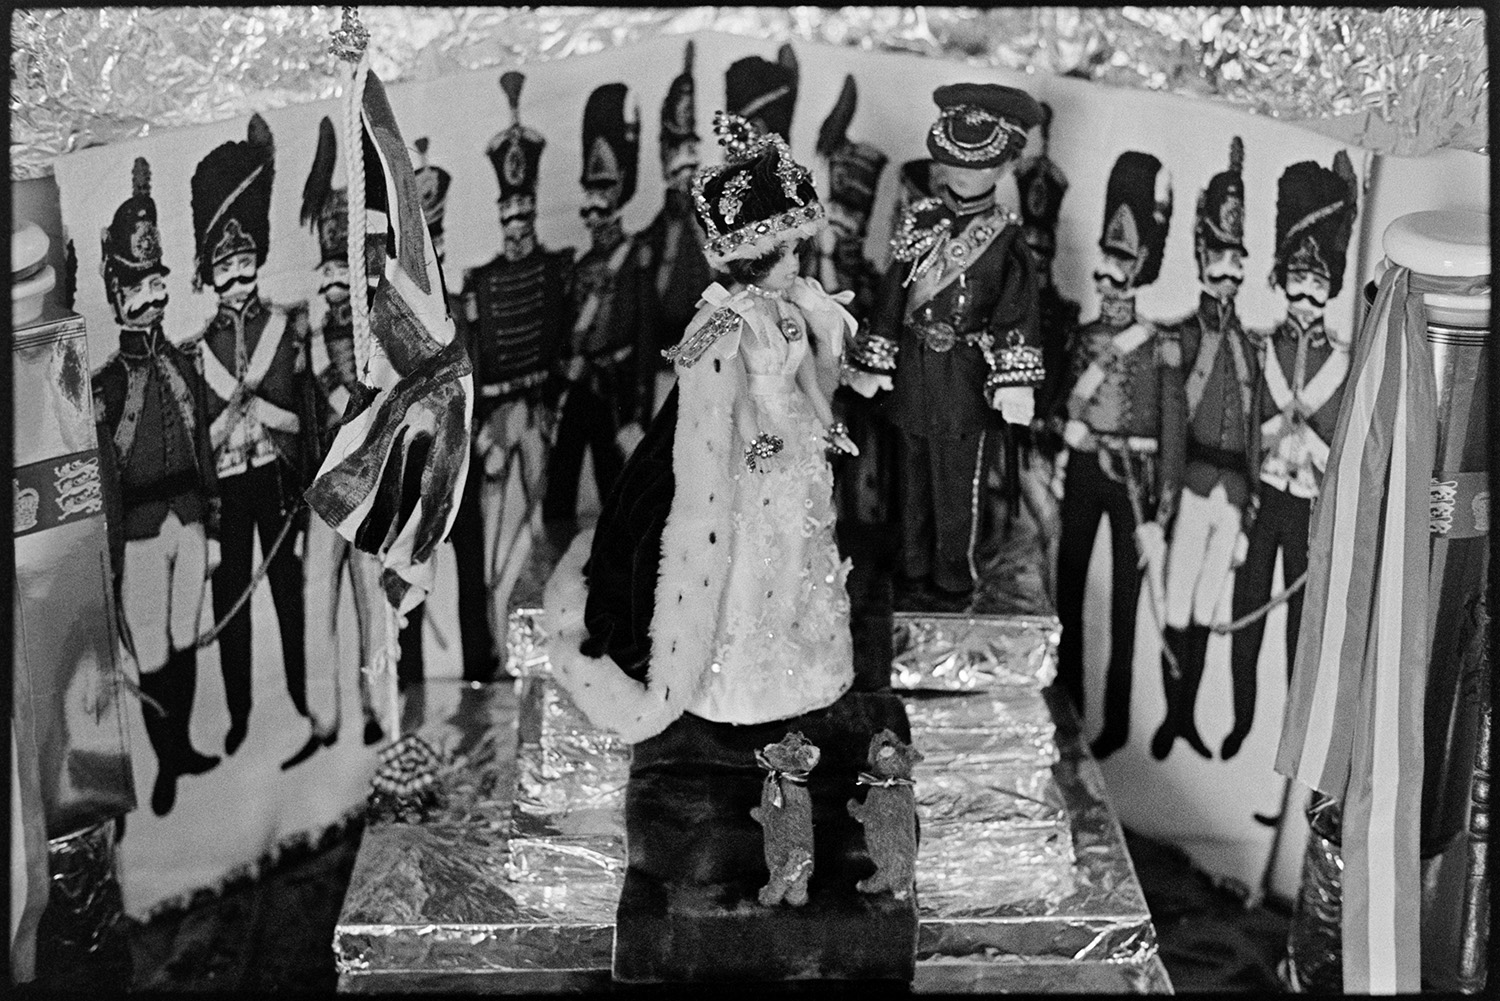 Royal display of dolls in village Post Office, Jubilee. 
[A display of royal dolls and corgis in Kings Nympton Post Office for Queen Elizabeth II Silver Jubilee.]